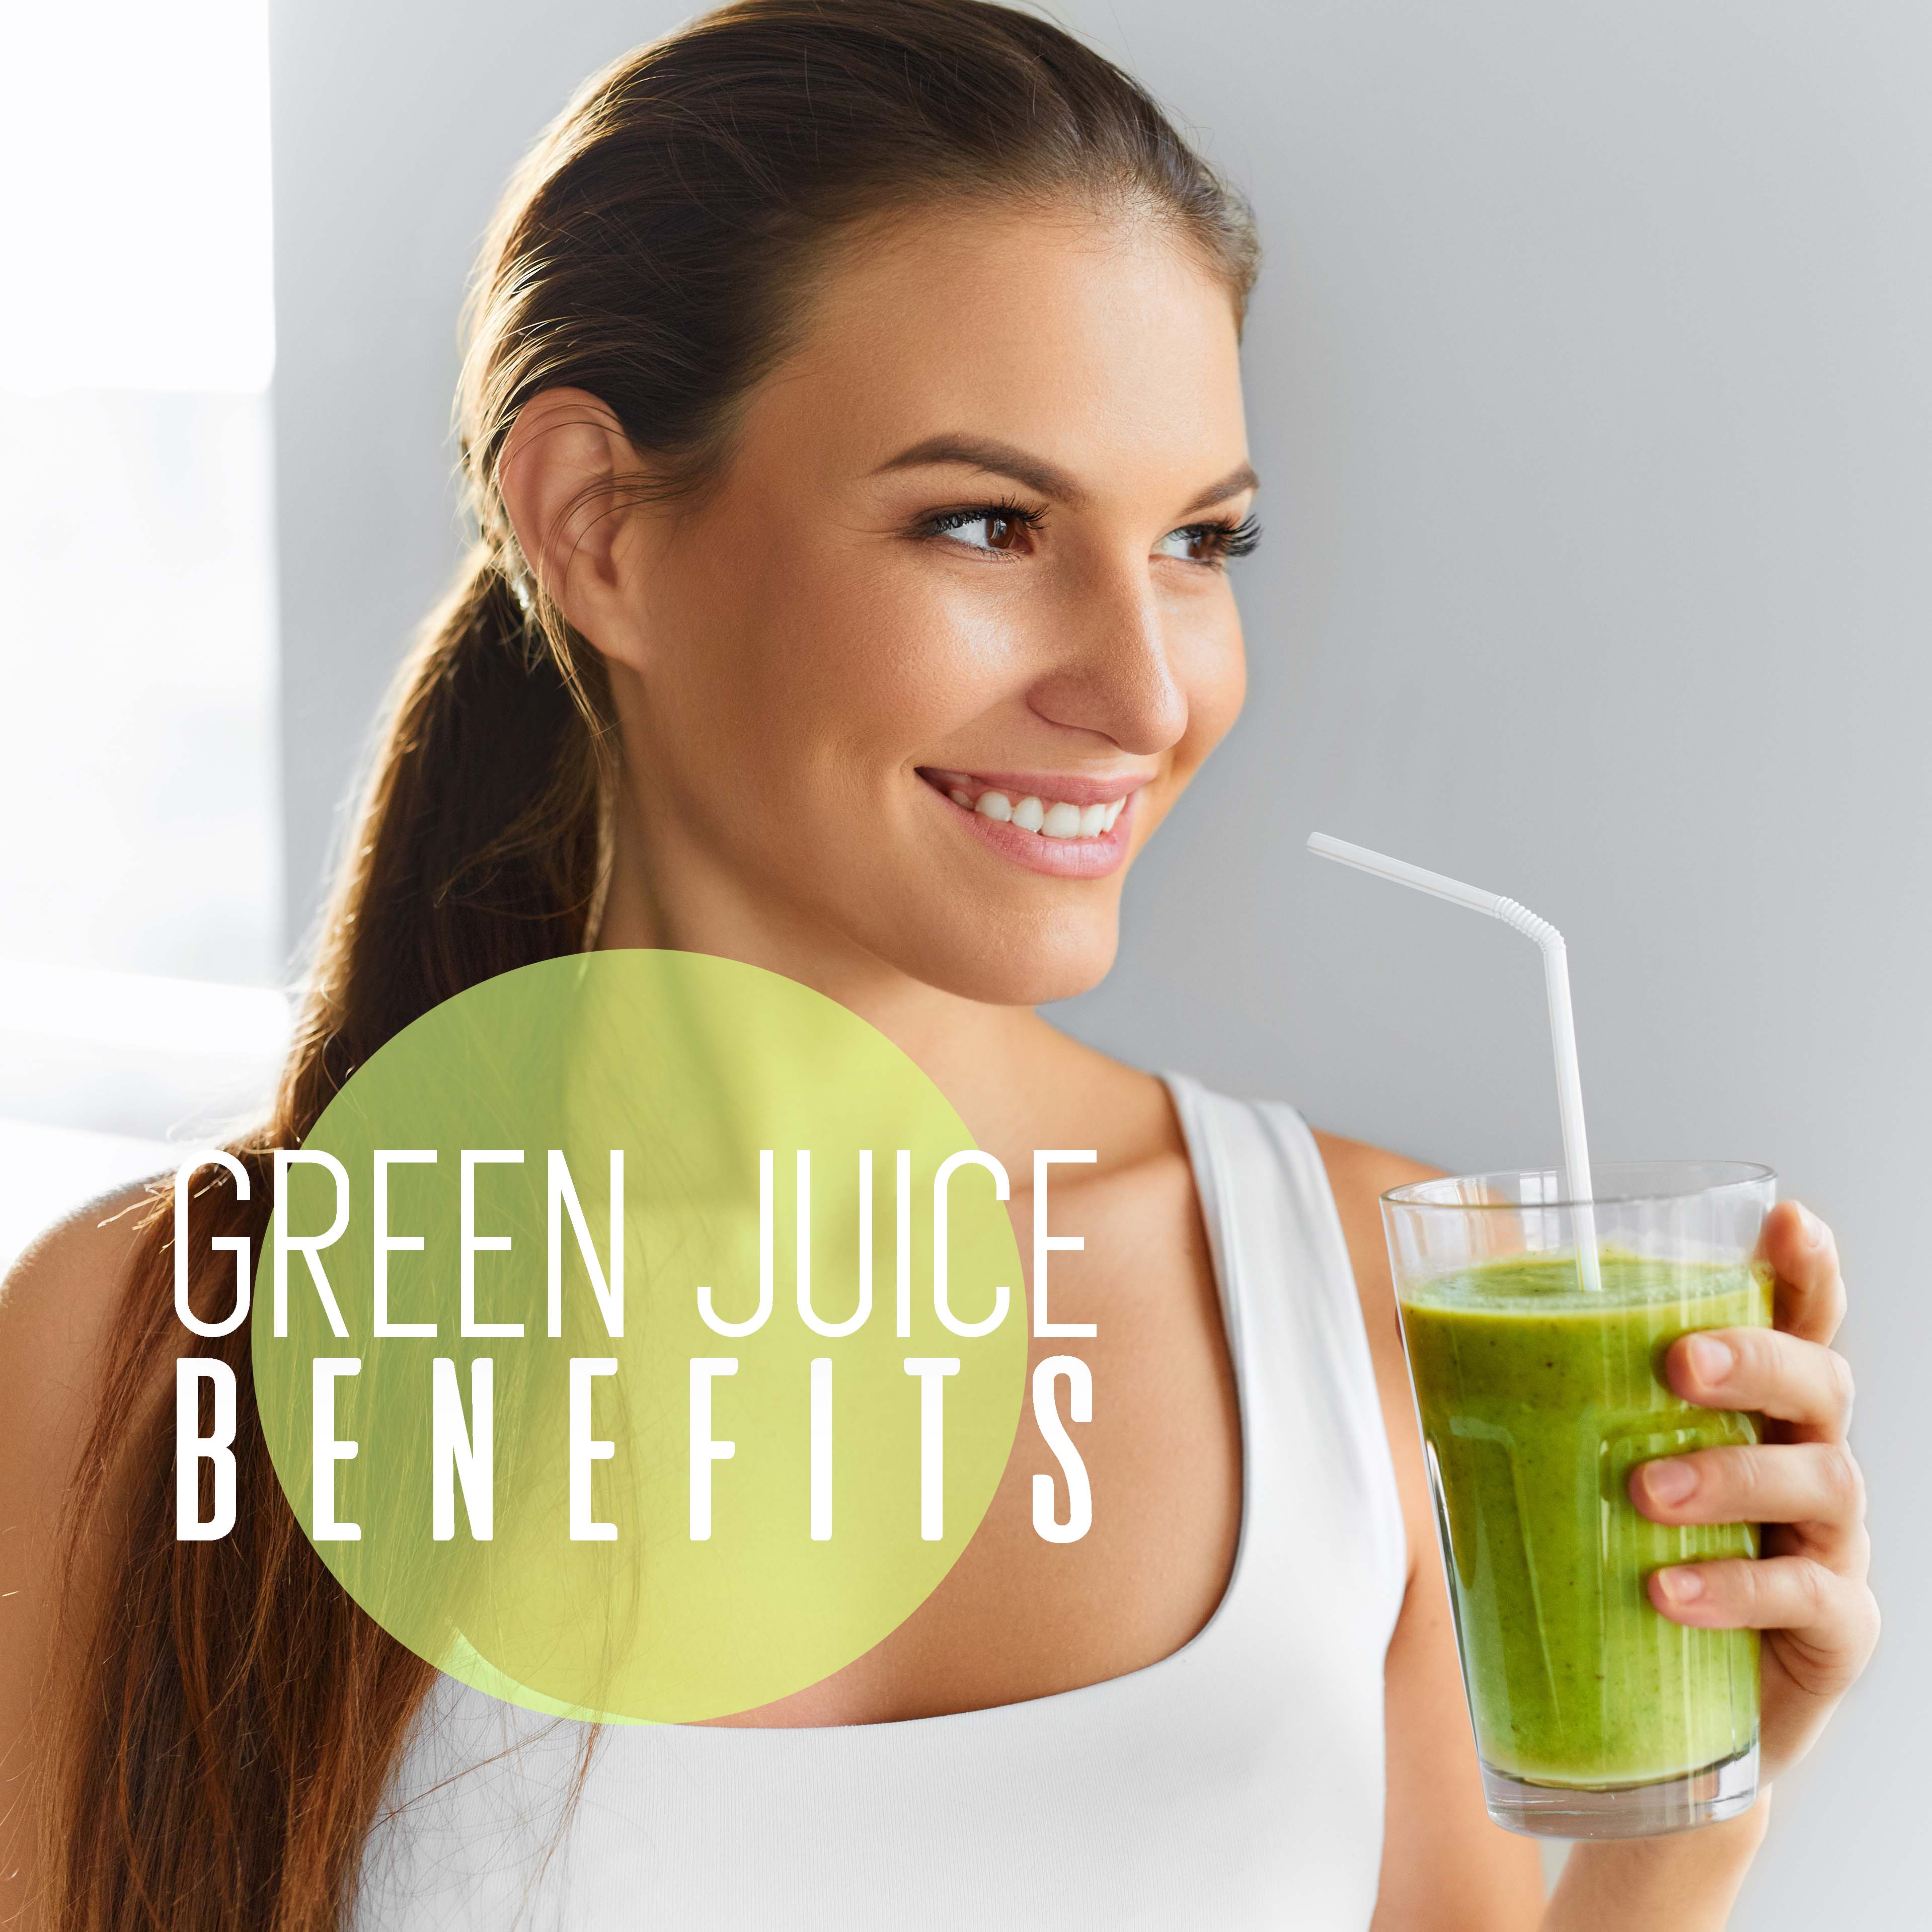 The Benefits of Green Juice